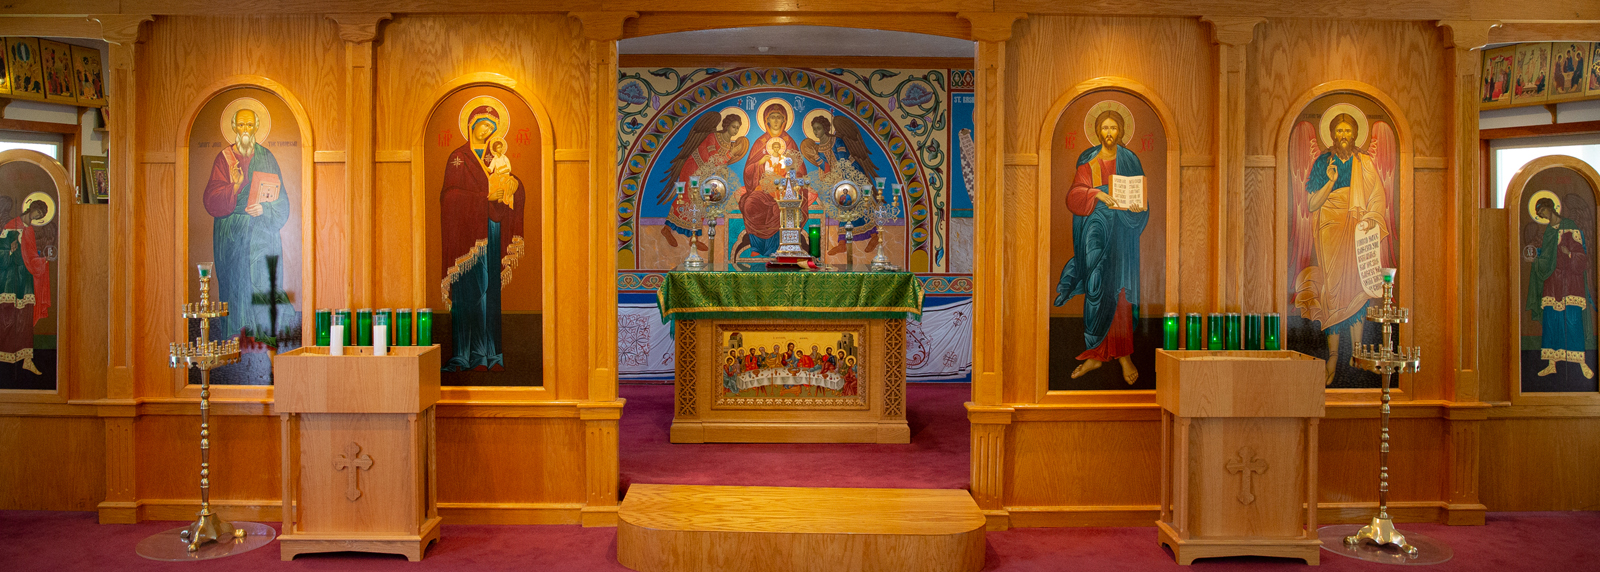 St. John The Evangelist Orthodox Church